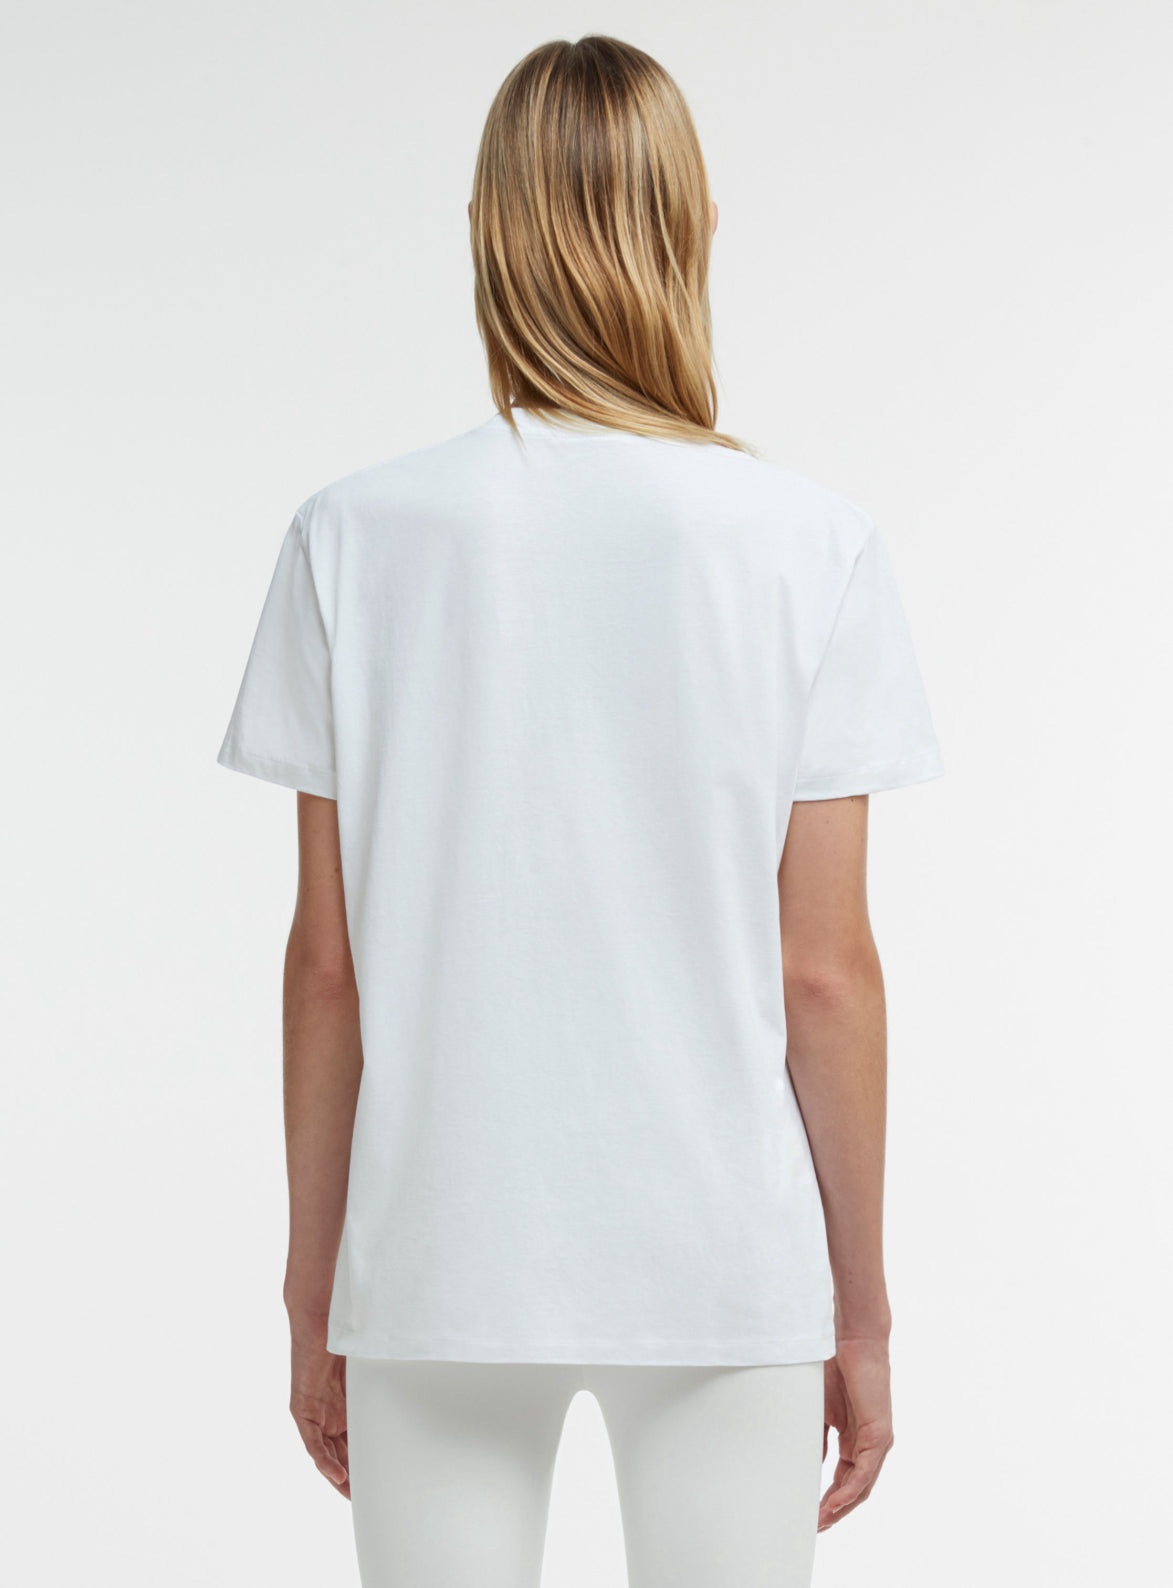 Classic, White, T-Shirt